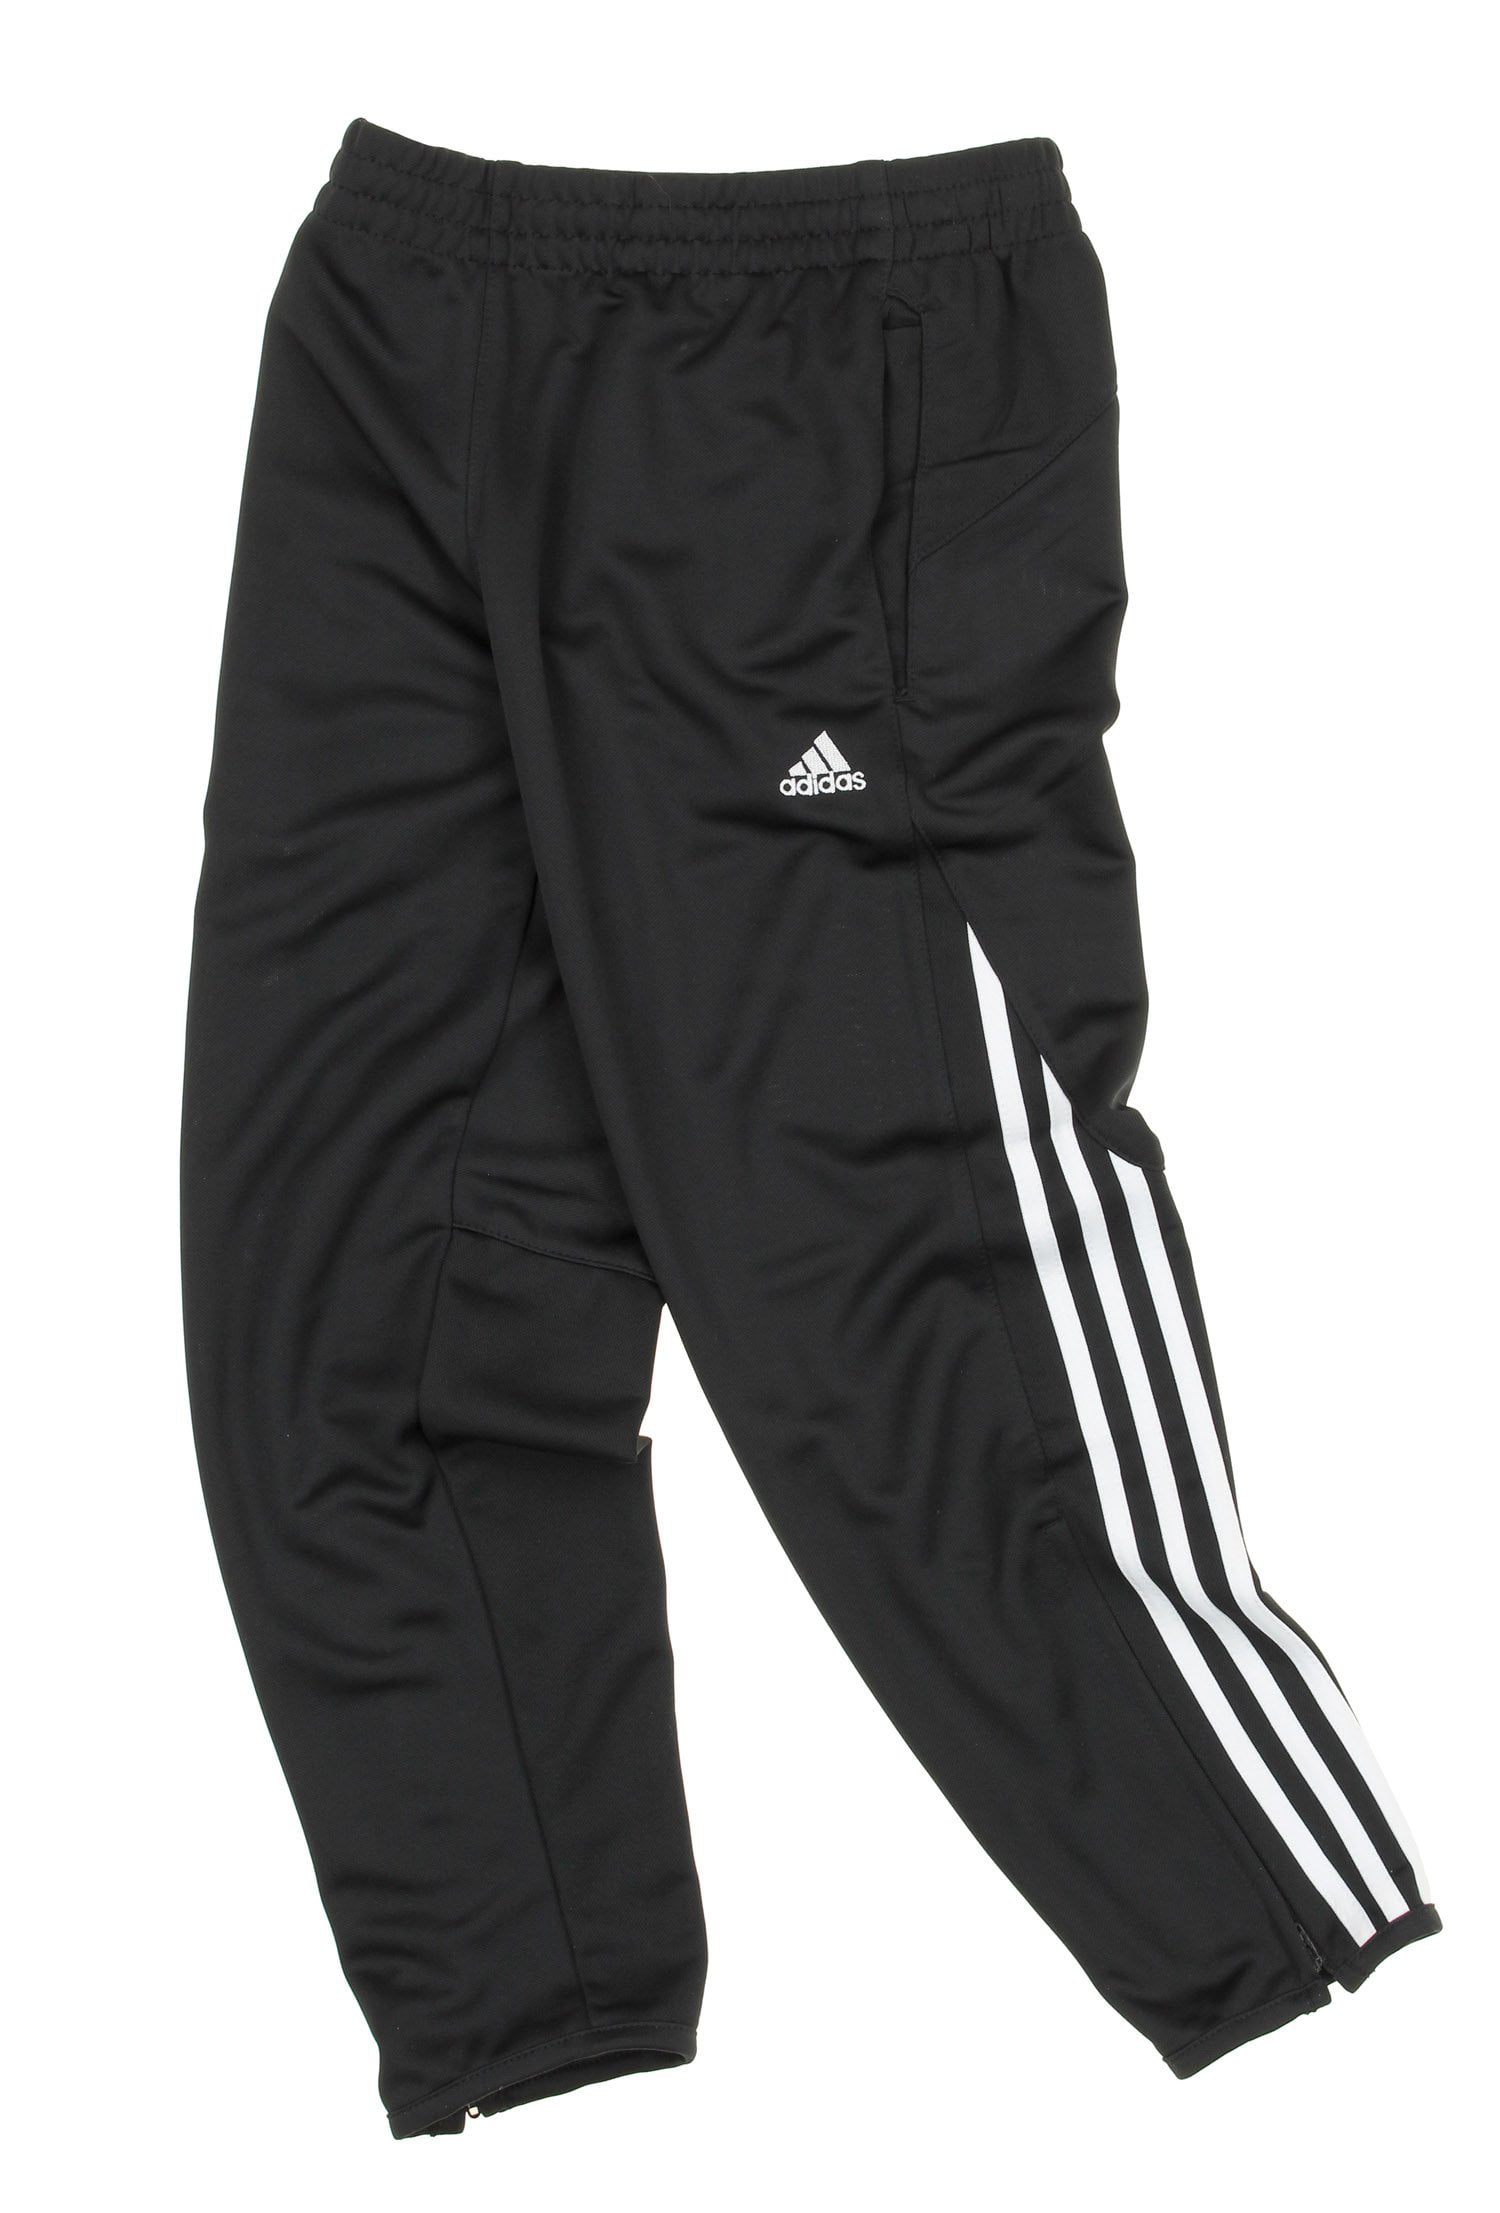 Adidas Youth Climalite Field Pants, 2 